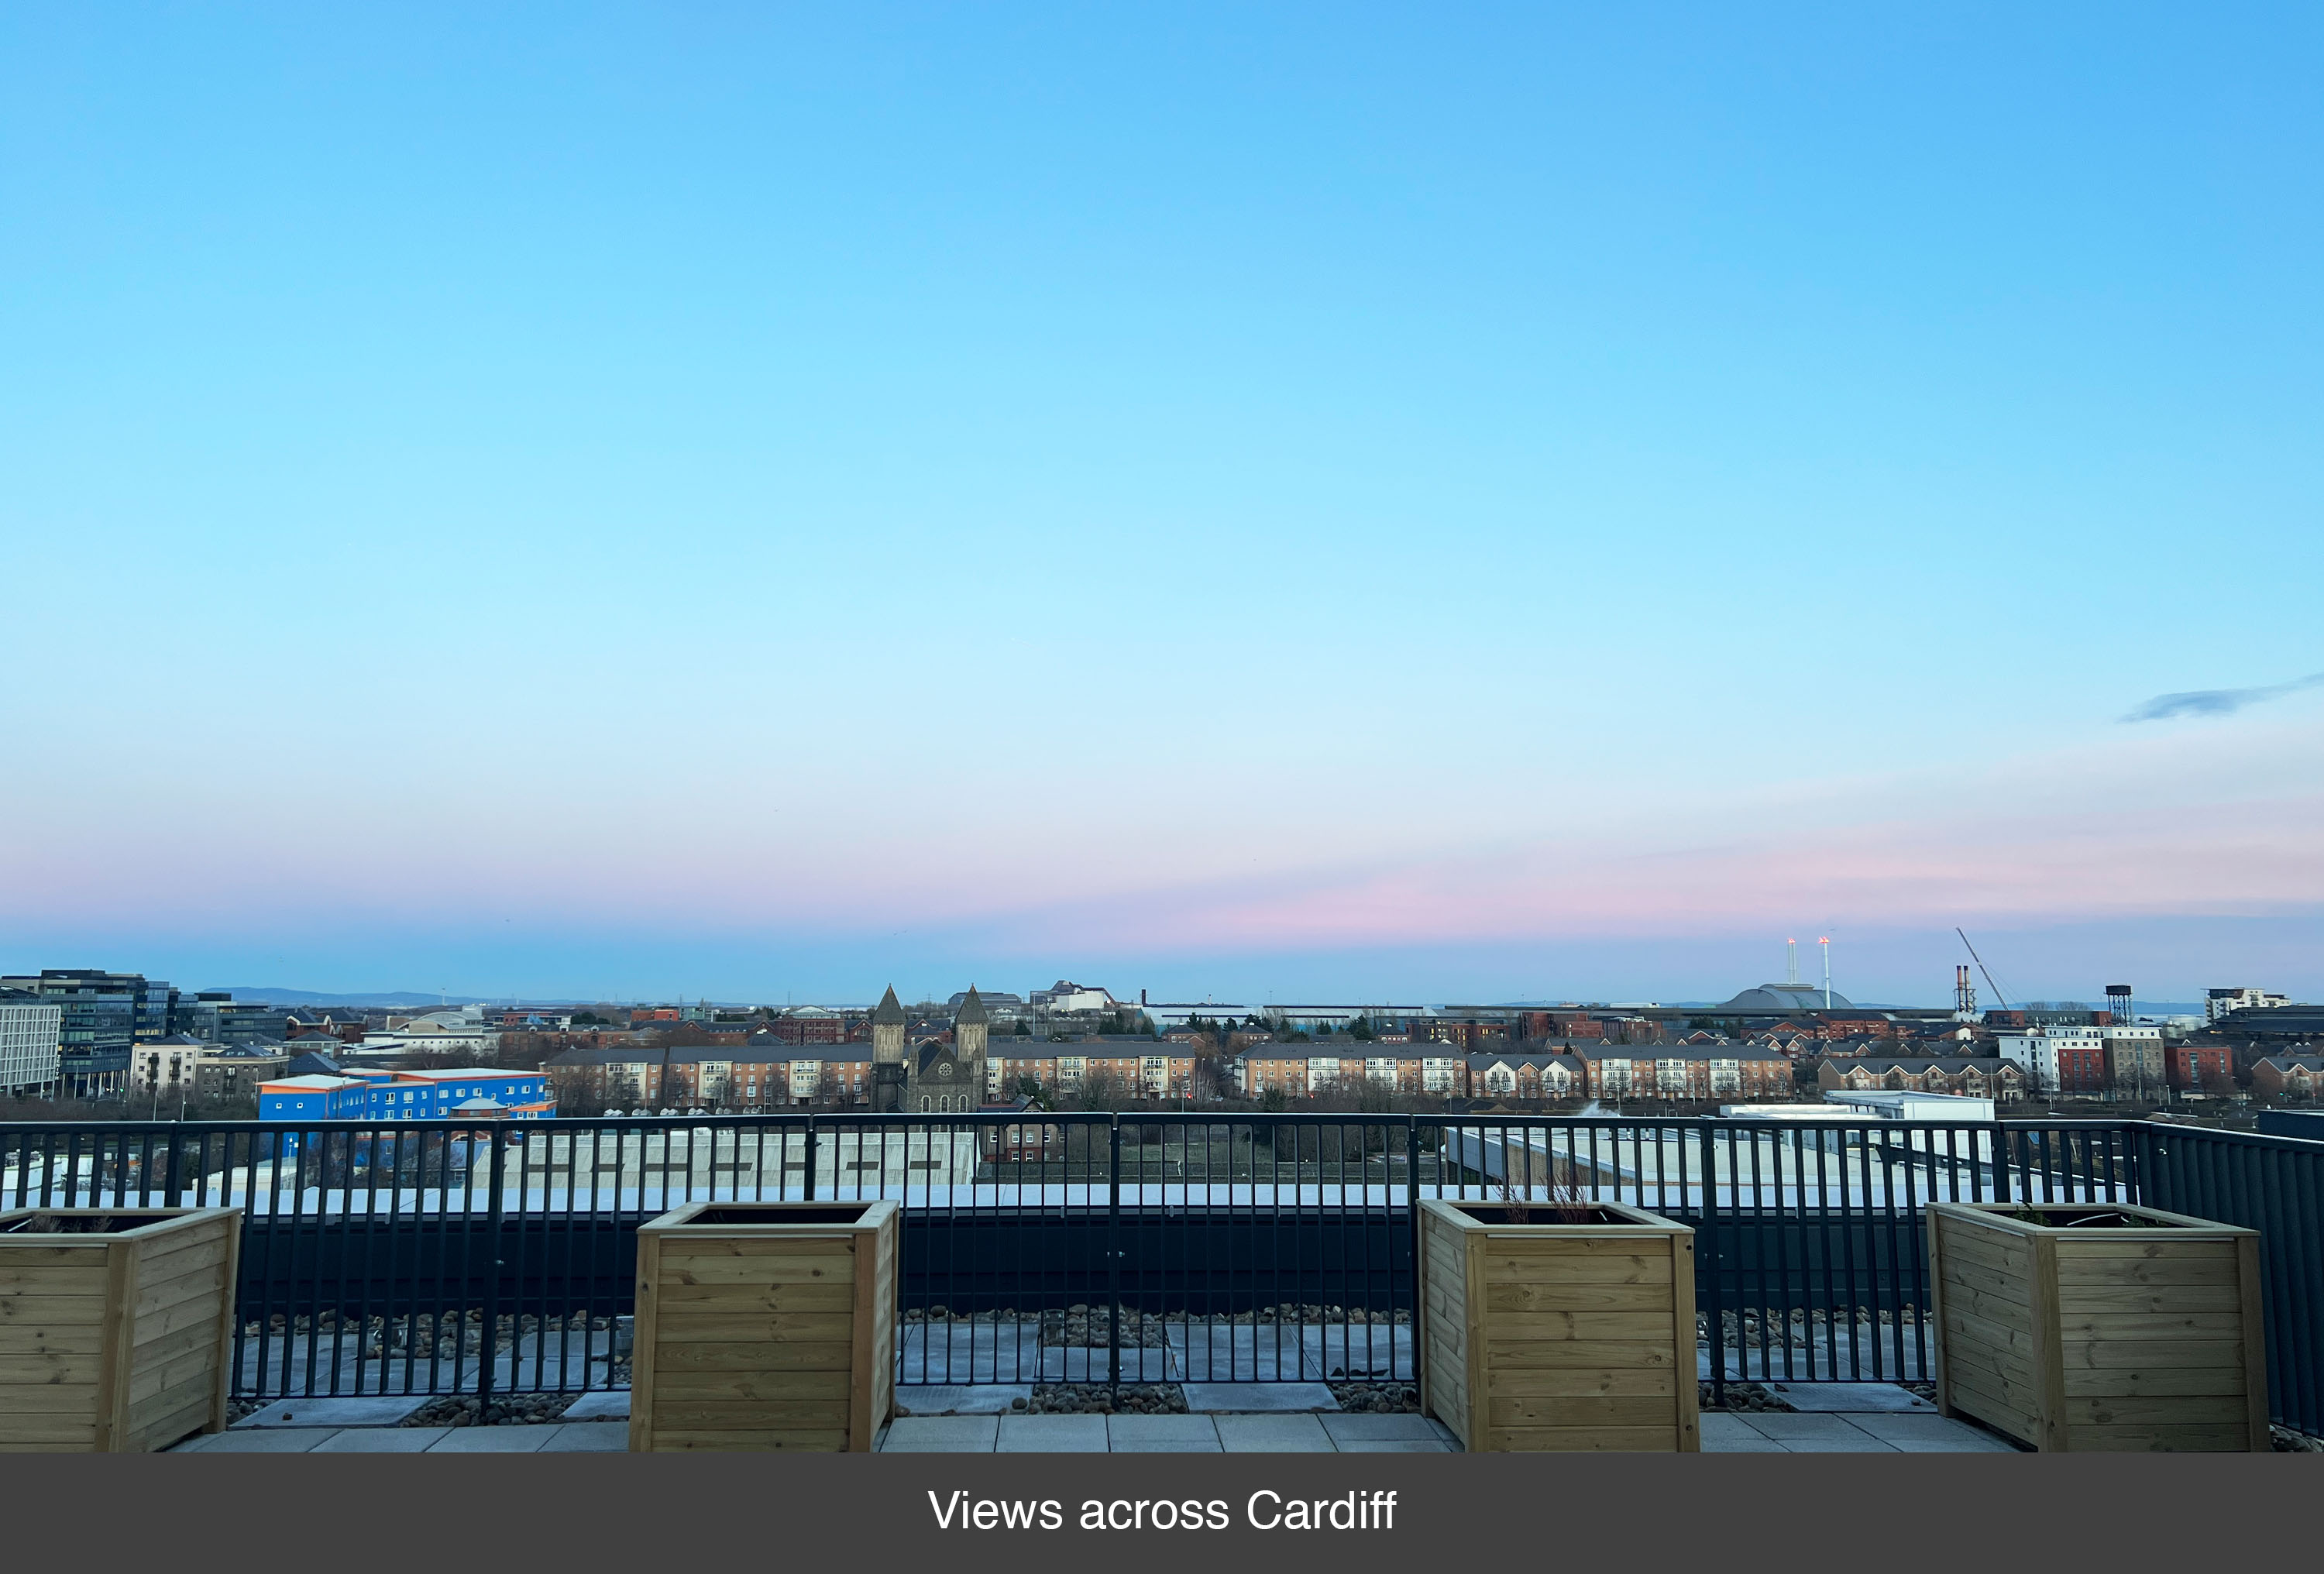 Views across Cardiff